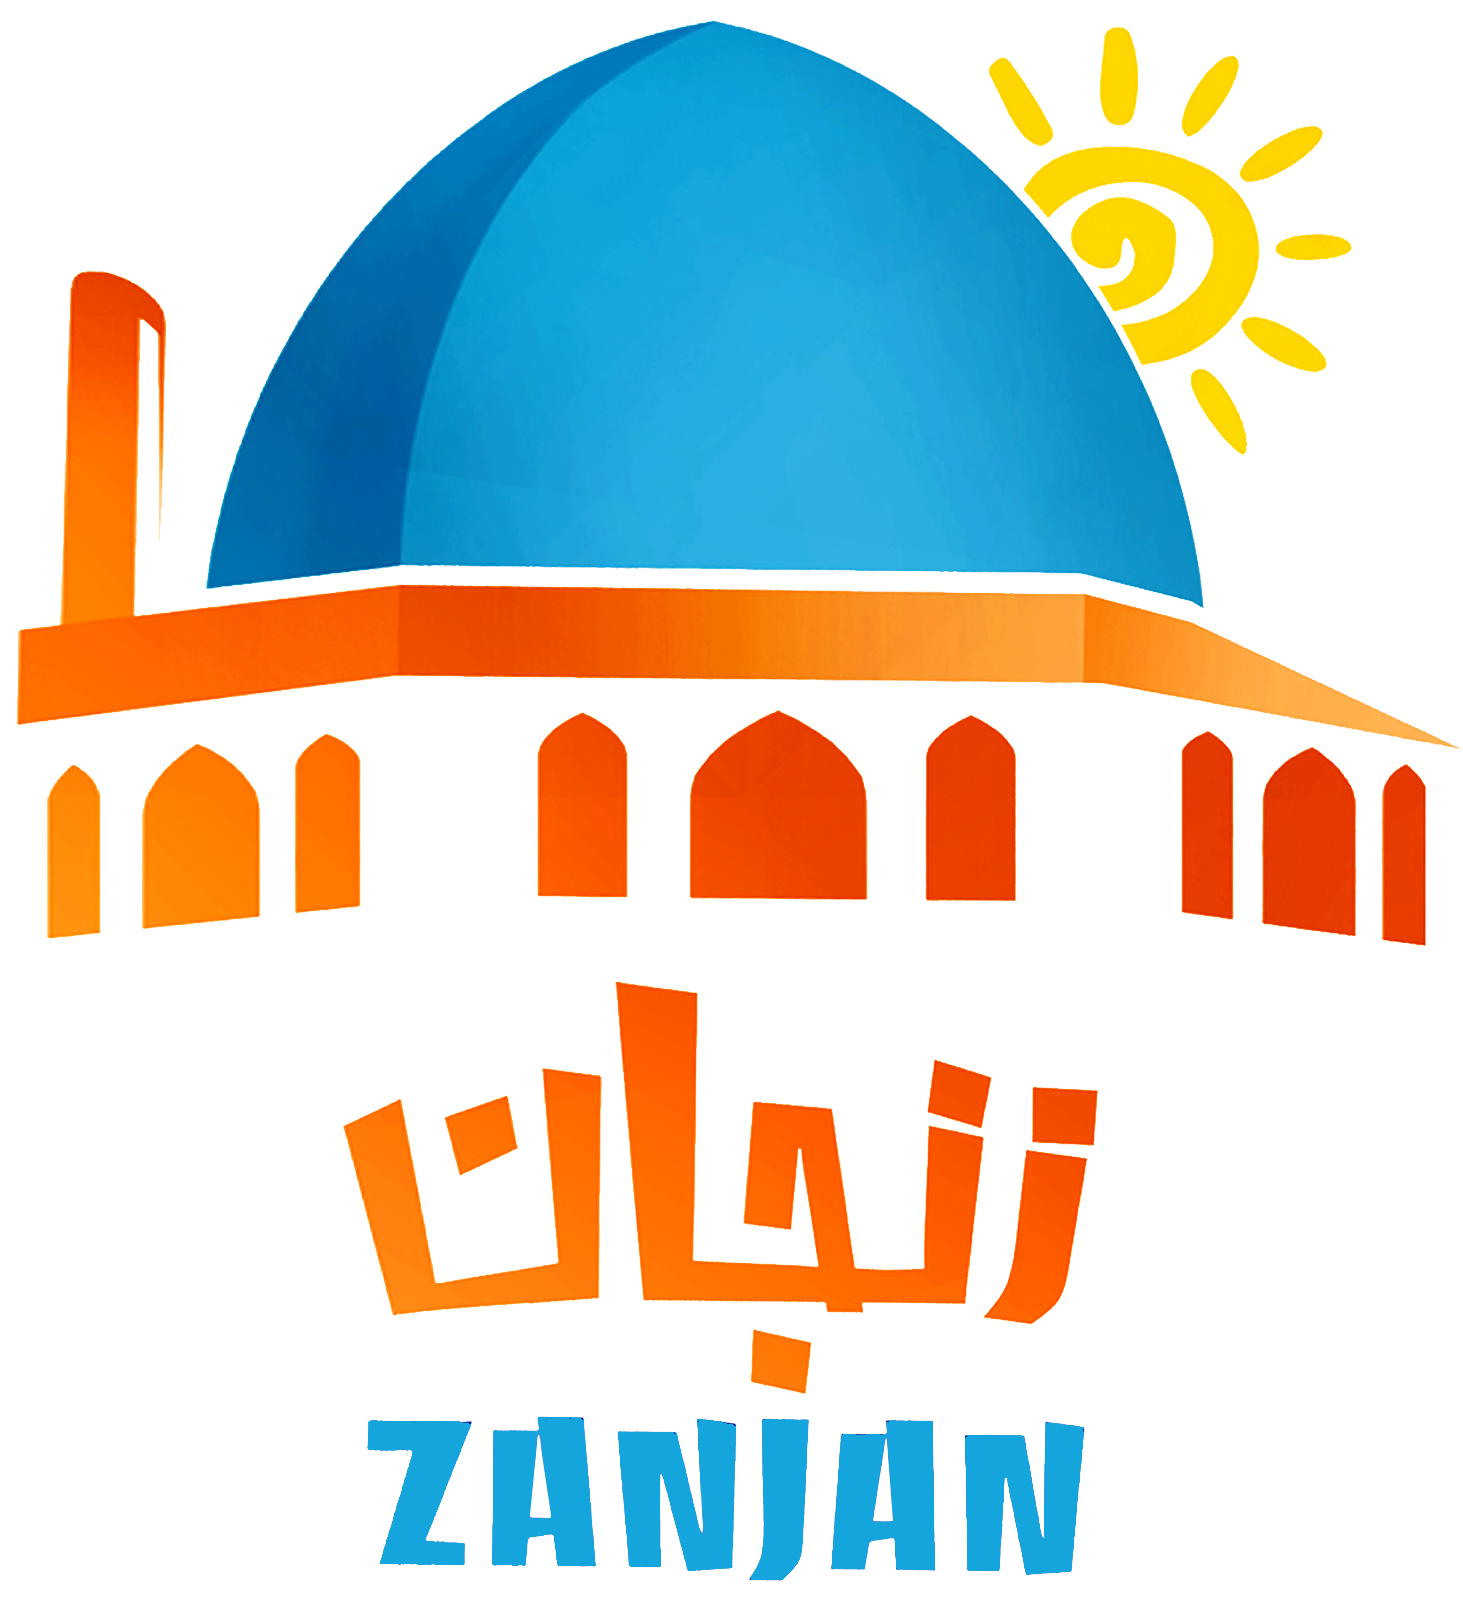 Zanjan Travel Guide